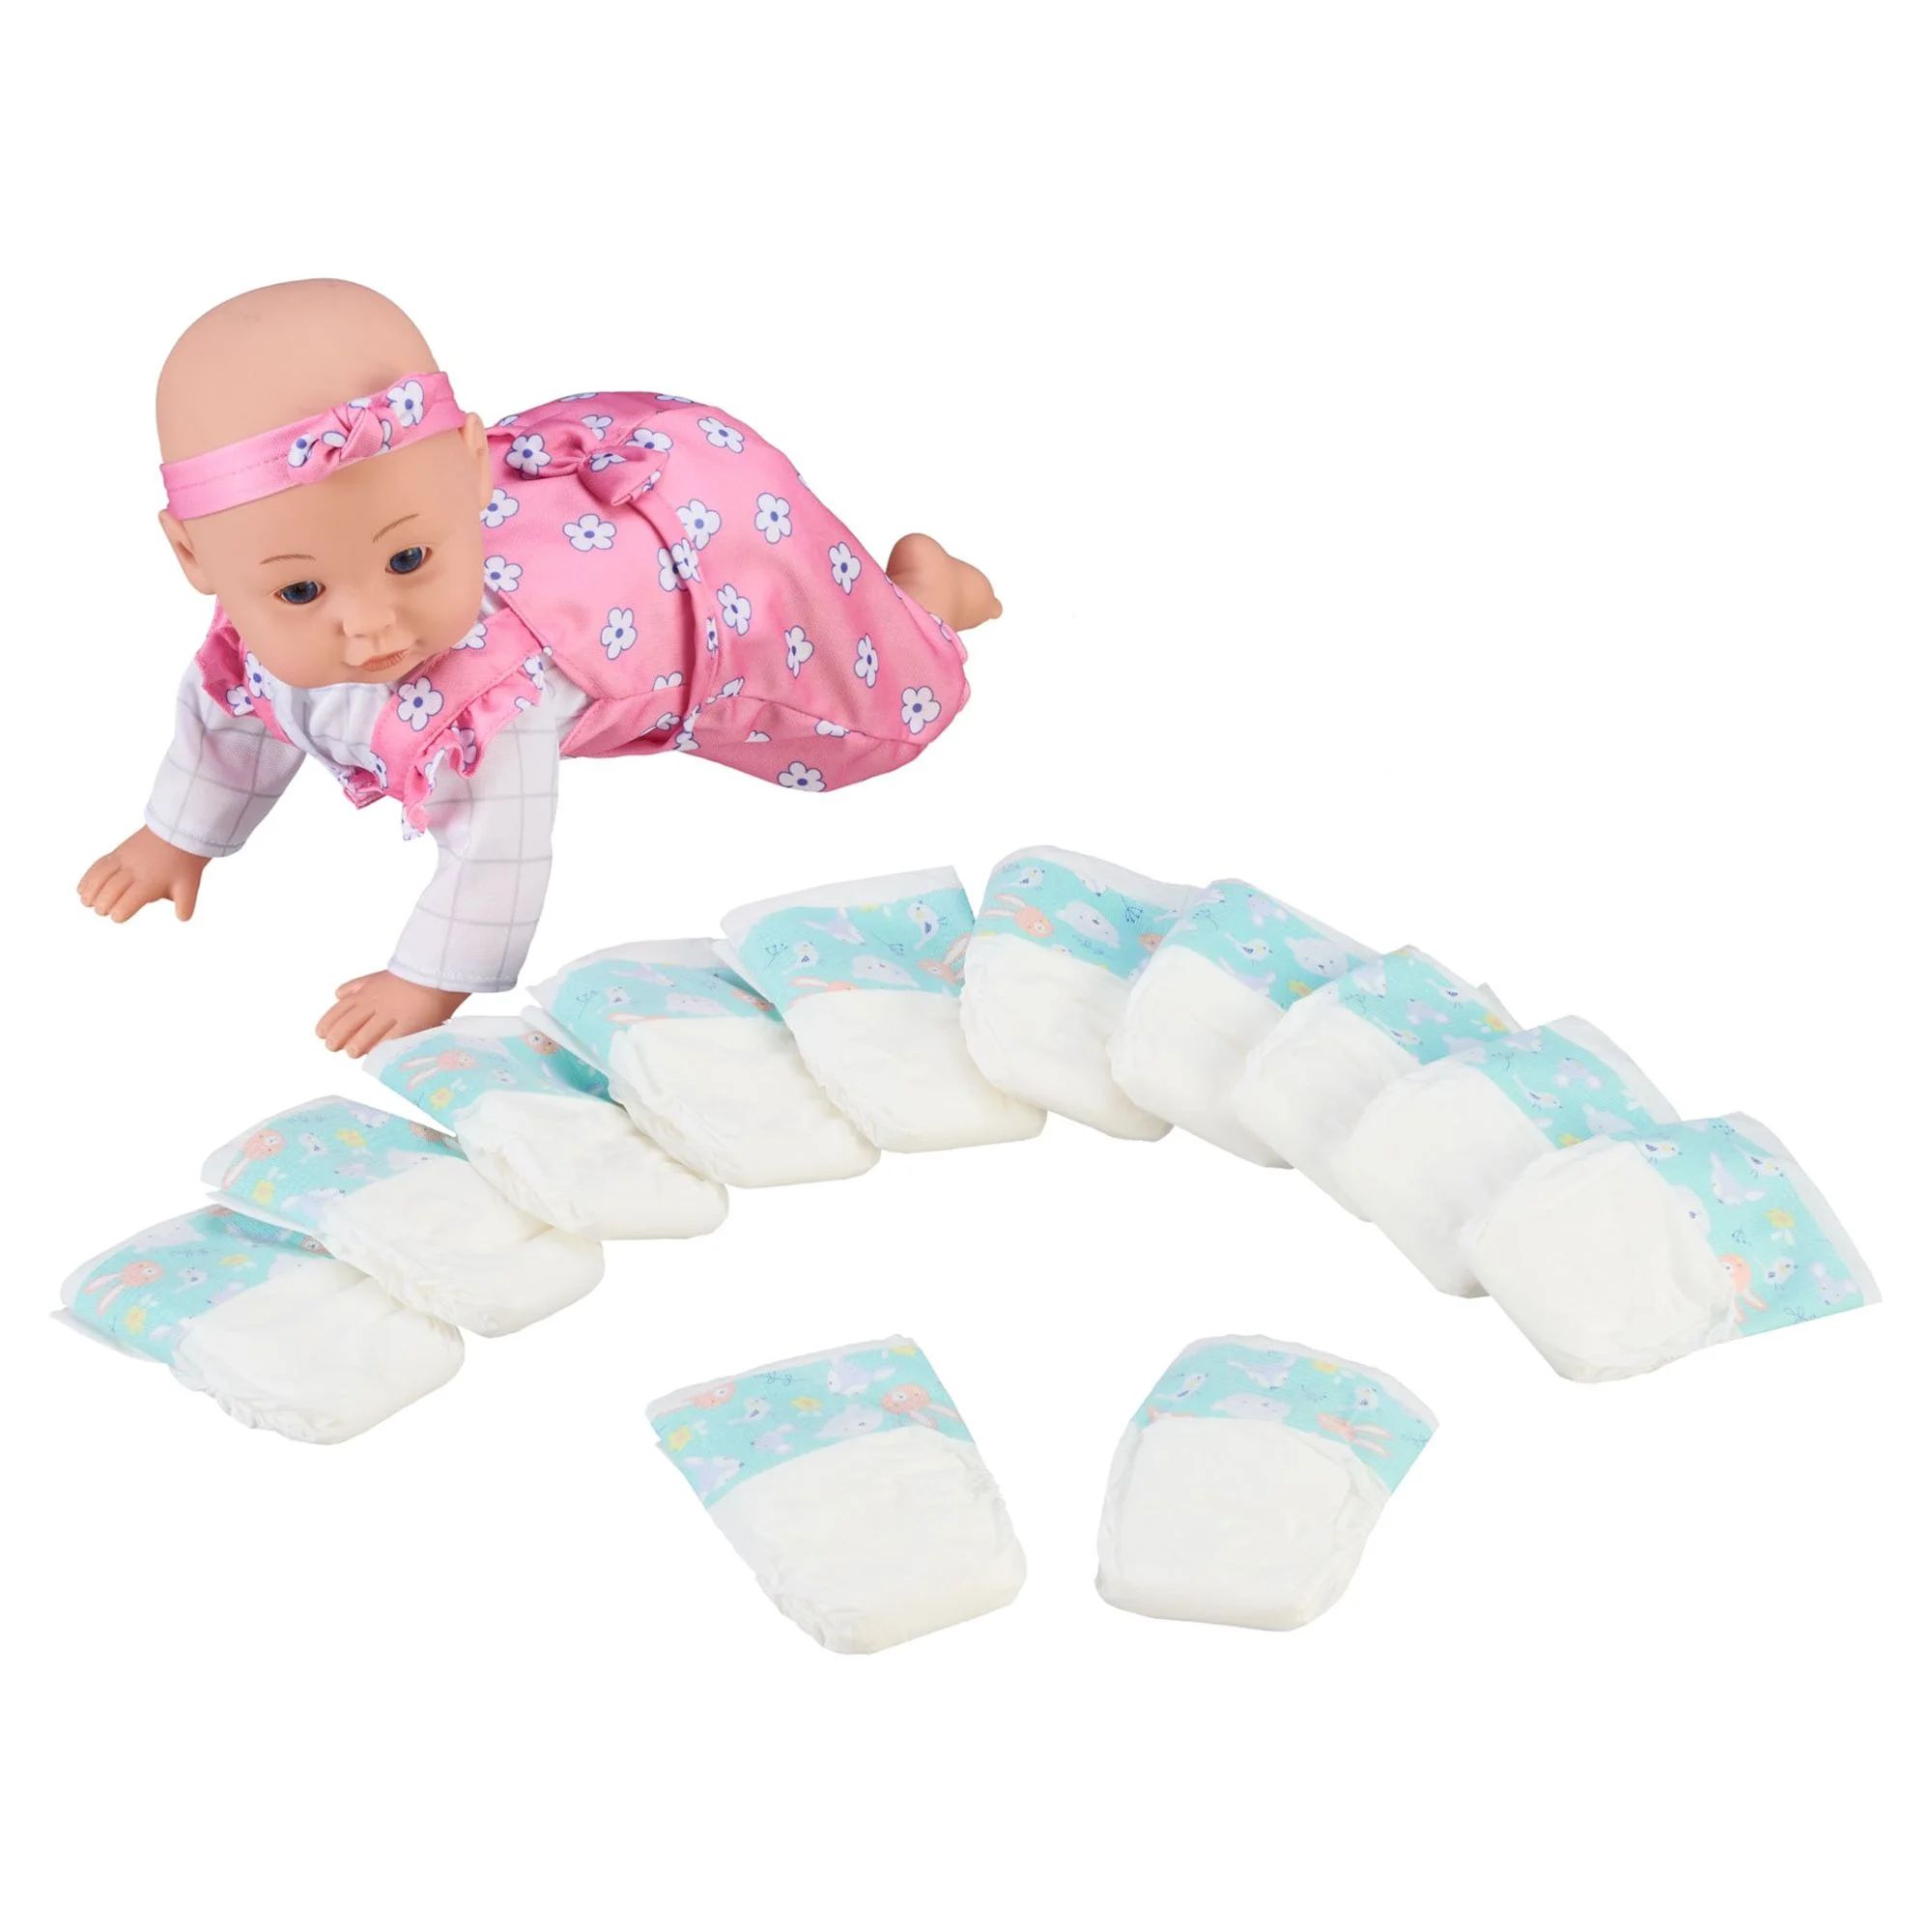 My Sweet Love Diaper Toy Accessory Play Set | Walmart (US)